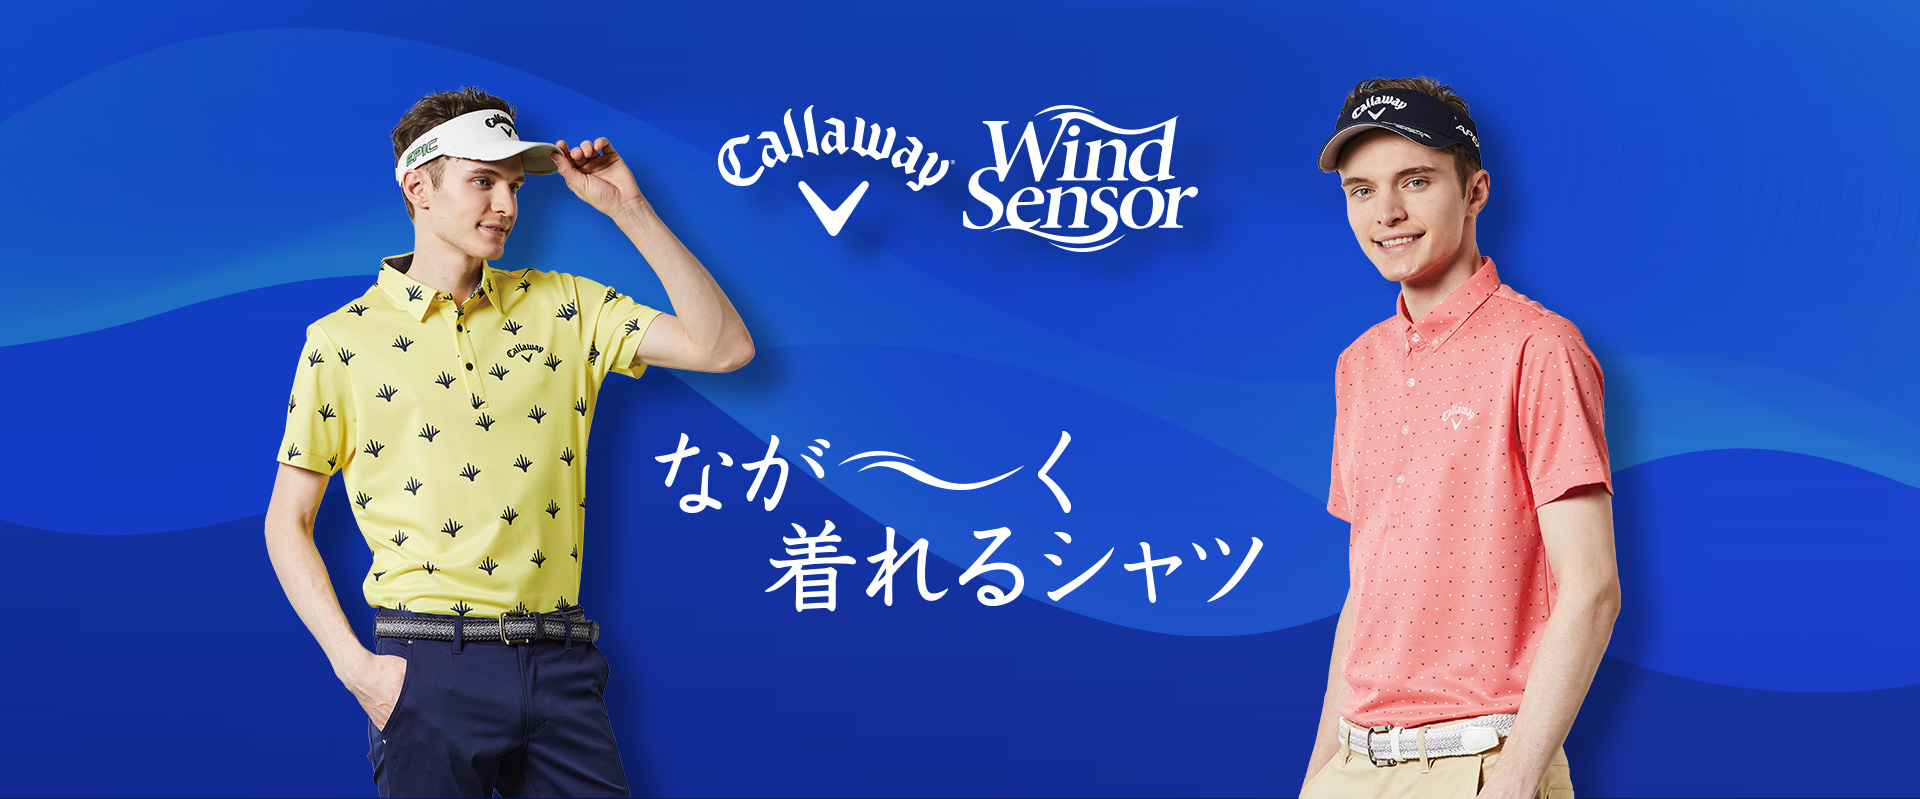 Callaway Wind Sensor なが～く着れるシャツ